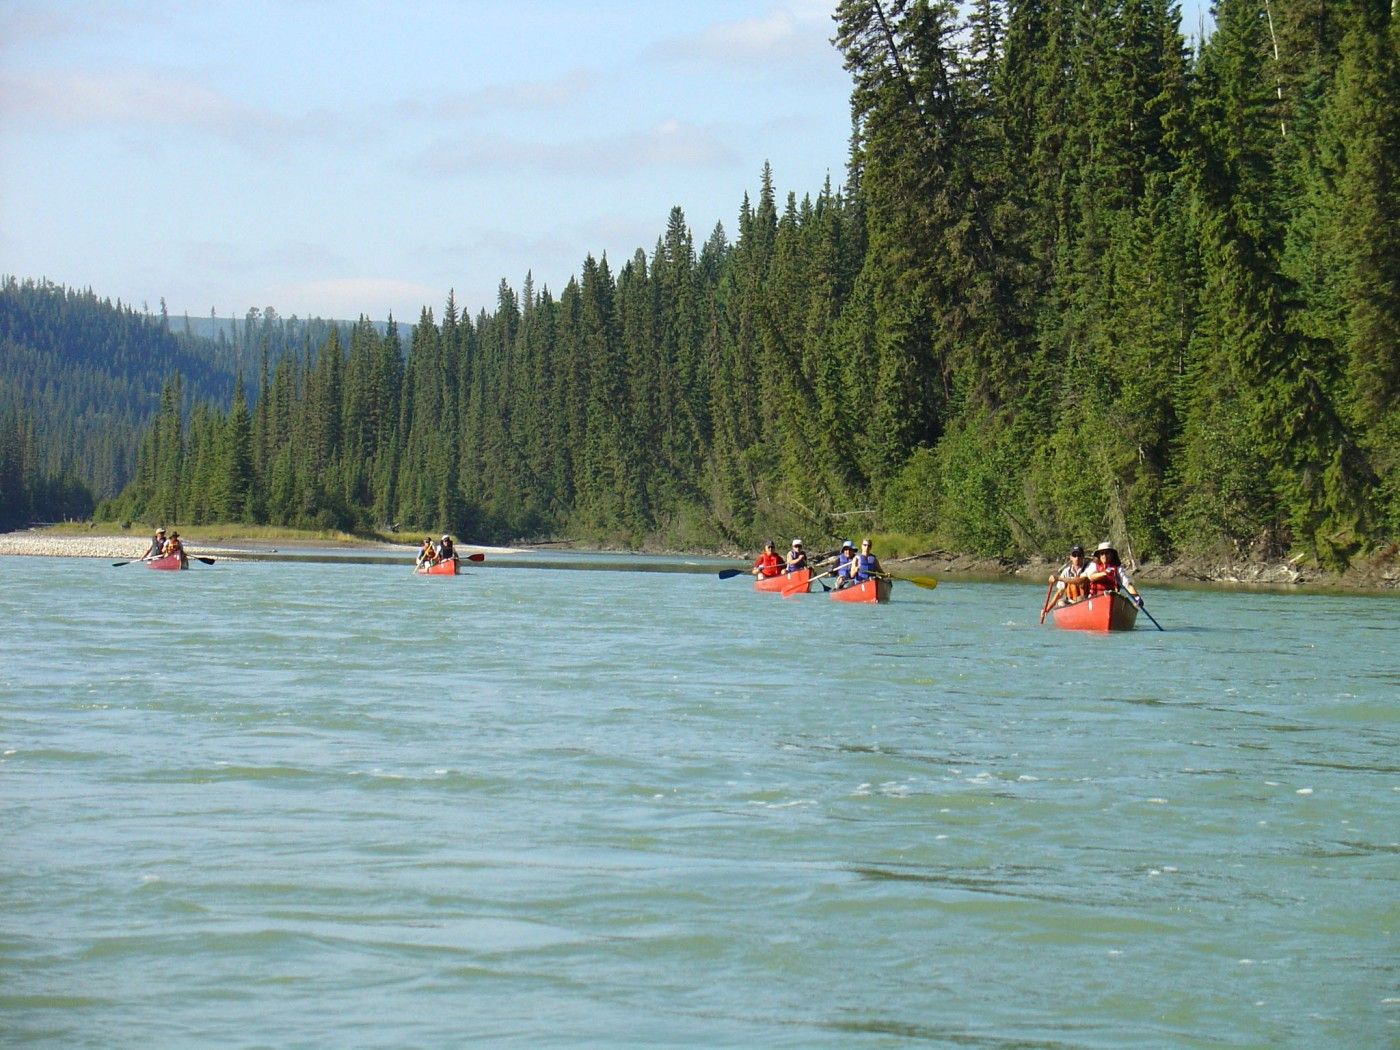 multi day canoe tour in canada, alberta | mehrtägige kanutour in kanada, alberta